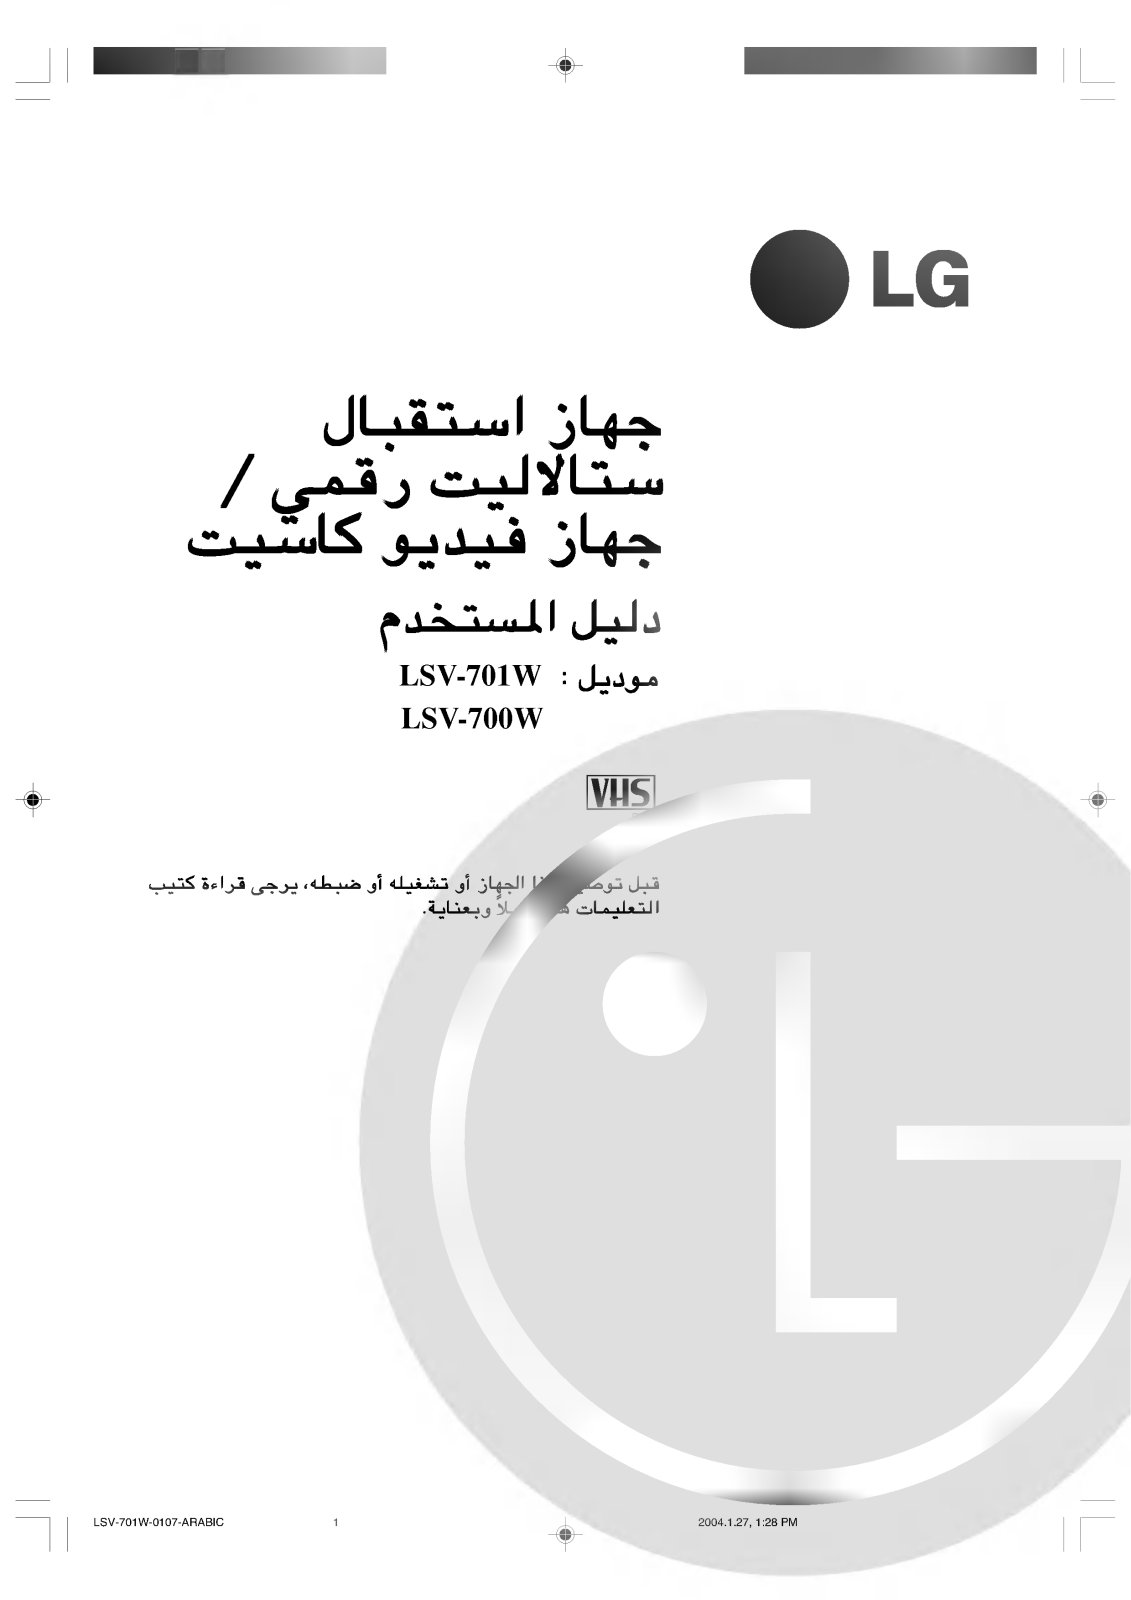 LG LSV-701W1 Owner’s Manual